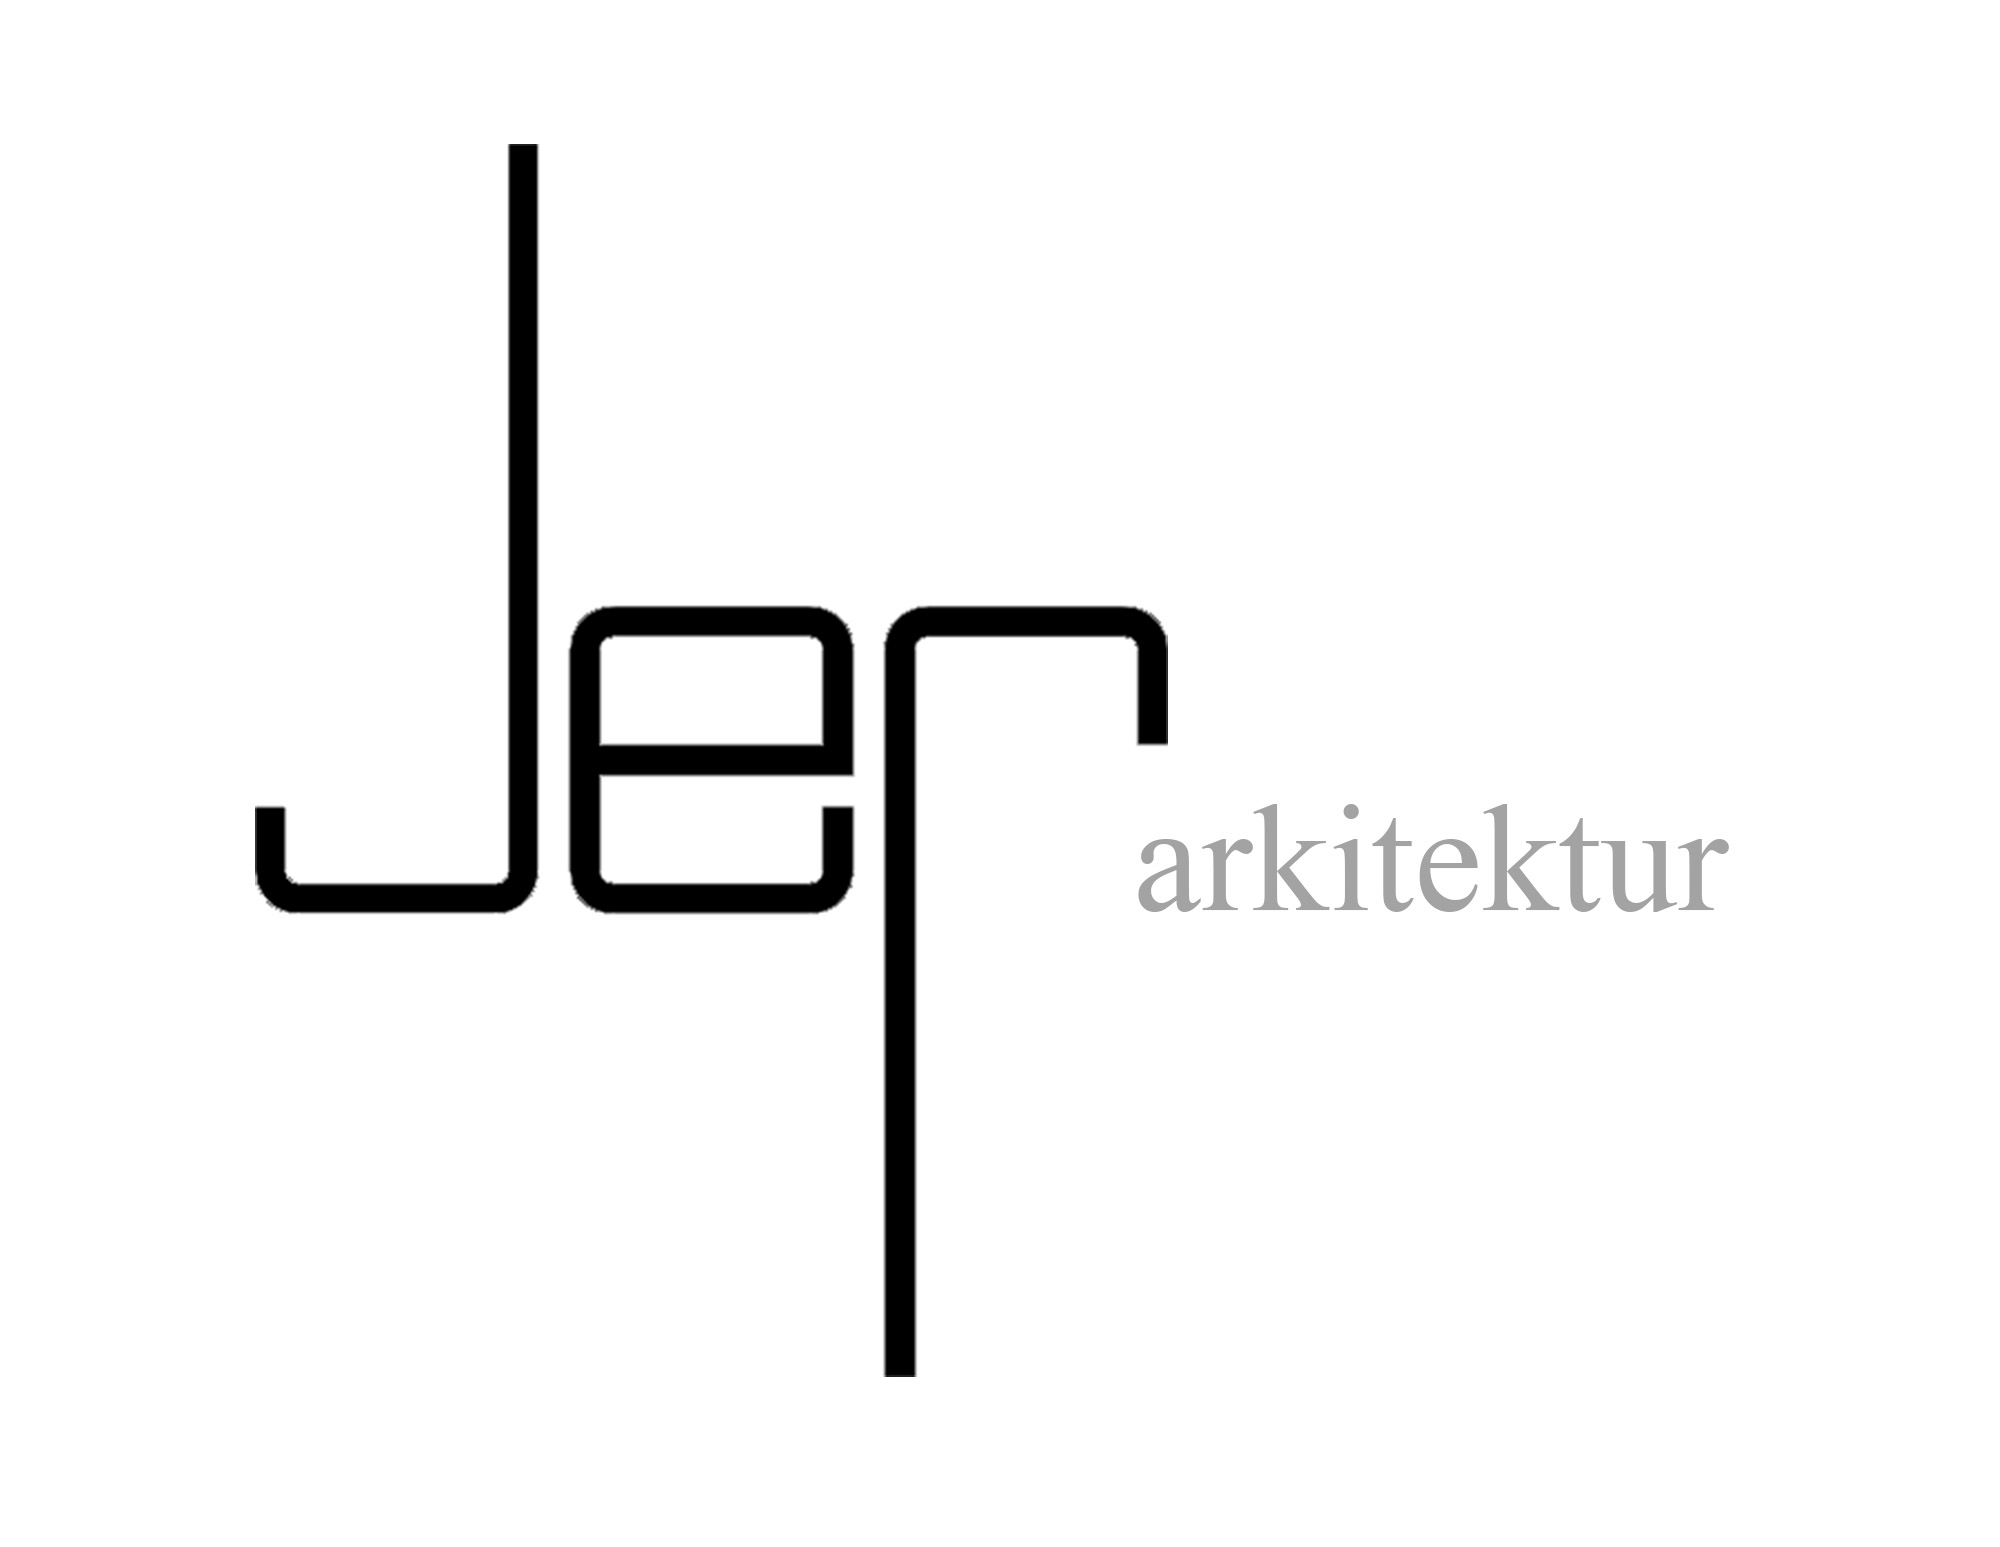 JEP arkitektur ApS